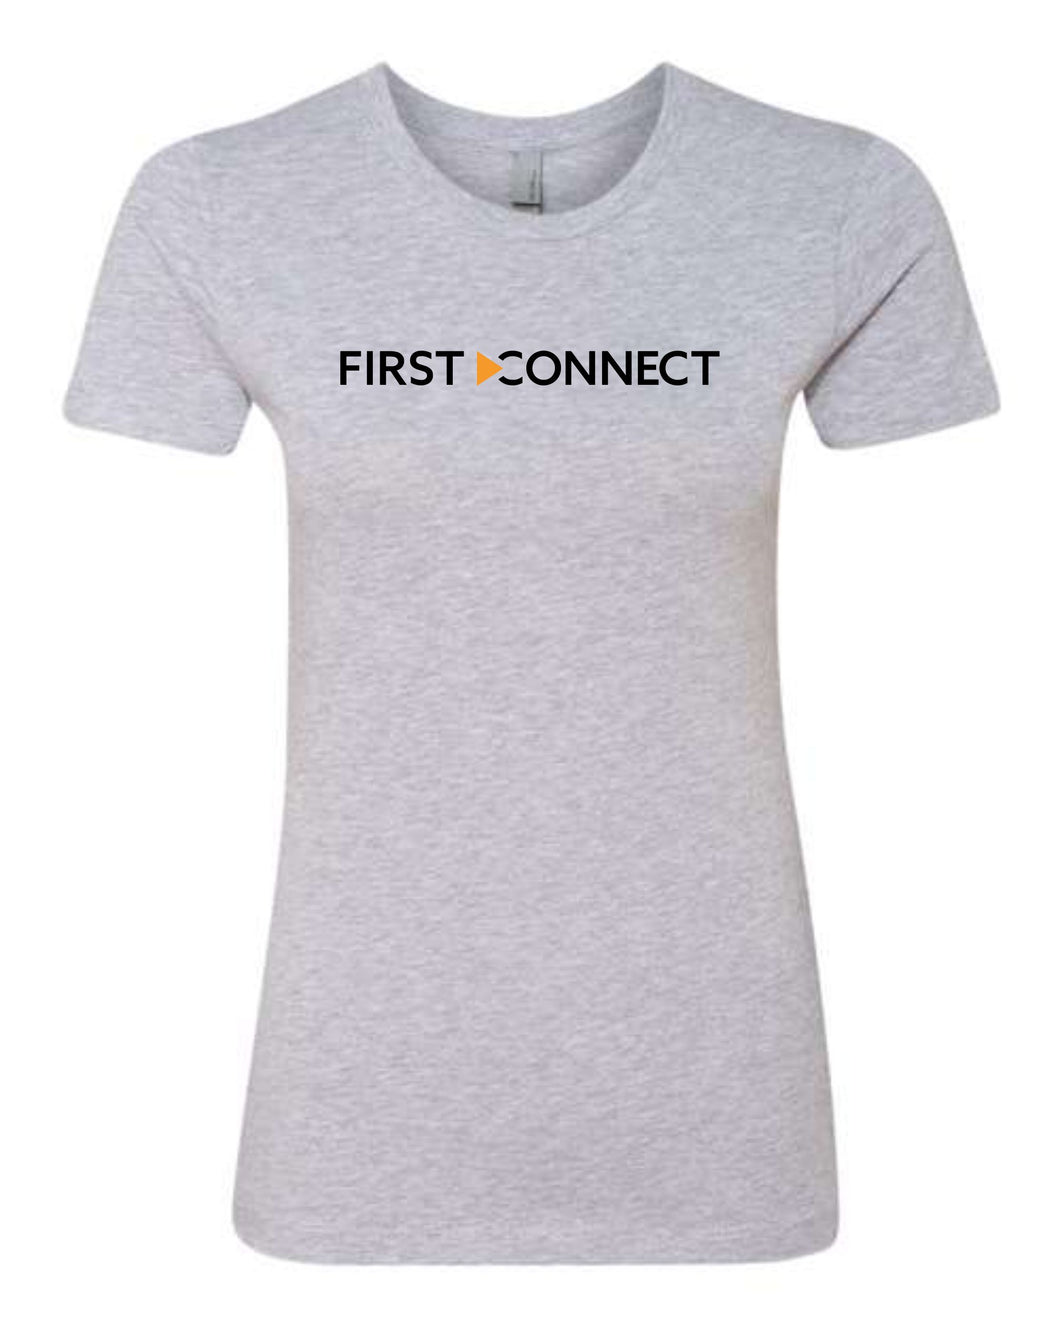 First Connect Women's Grey T-Shirt